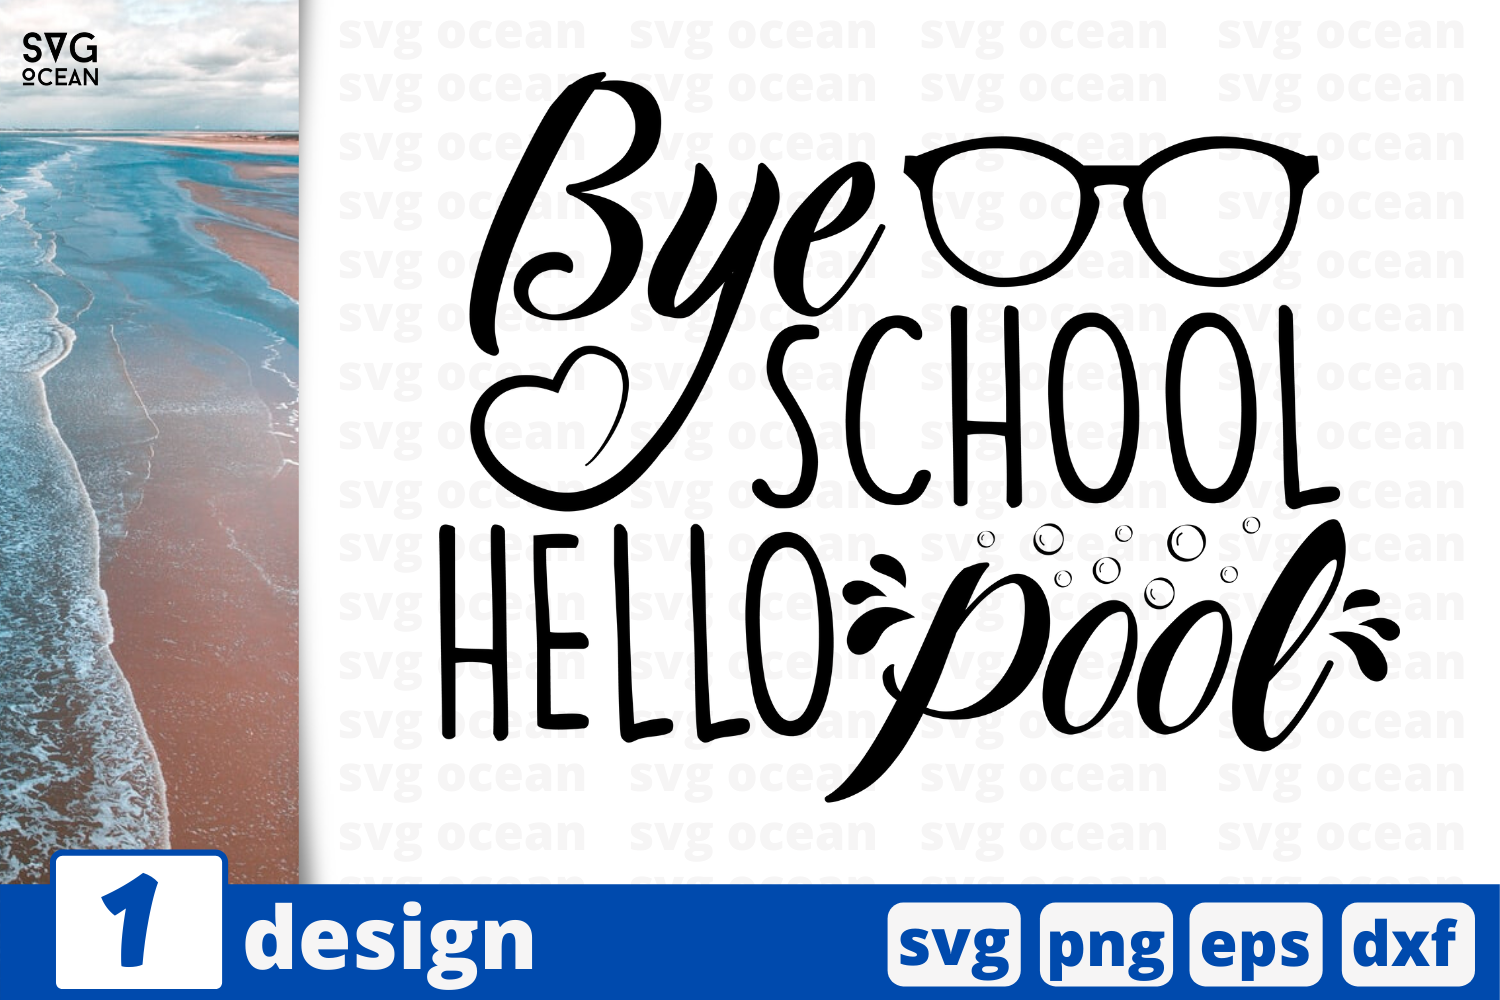 Download 1 Bye School Hello Pool Svg Bundle Quotes Cricut Svg By Svgocean Thehungryjpeg Com